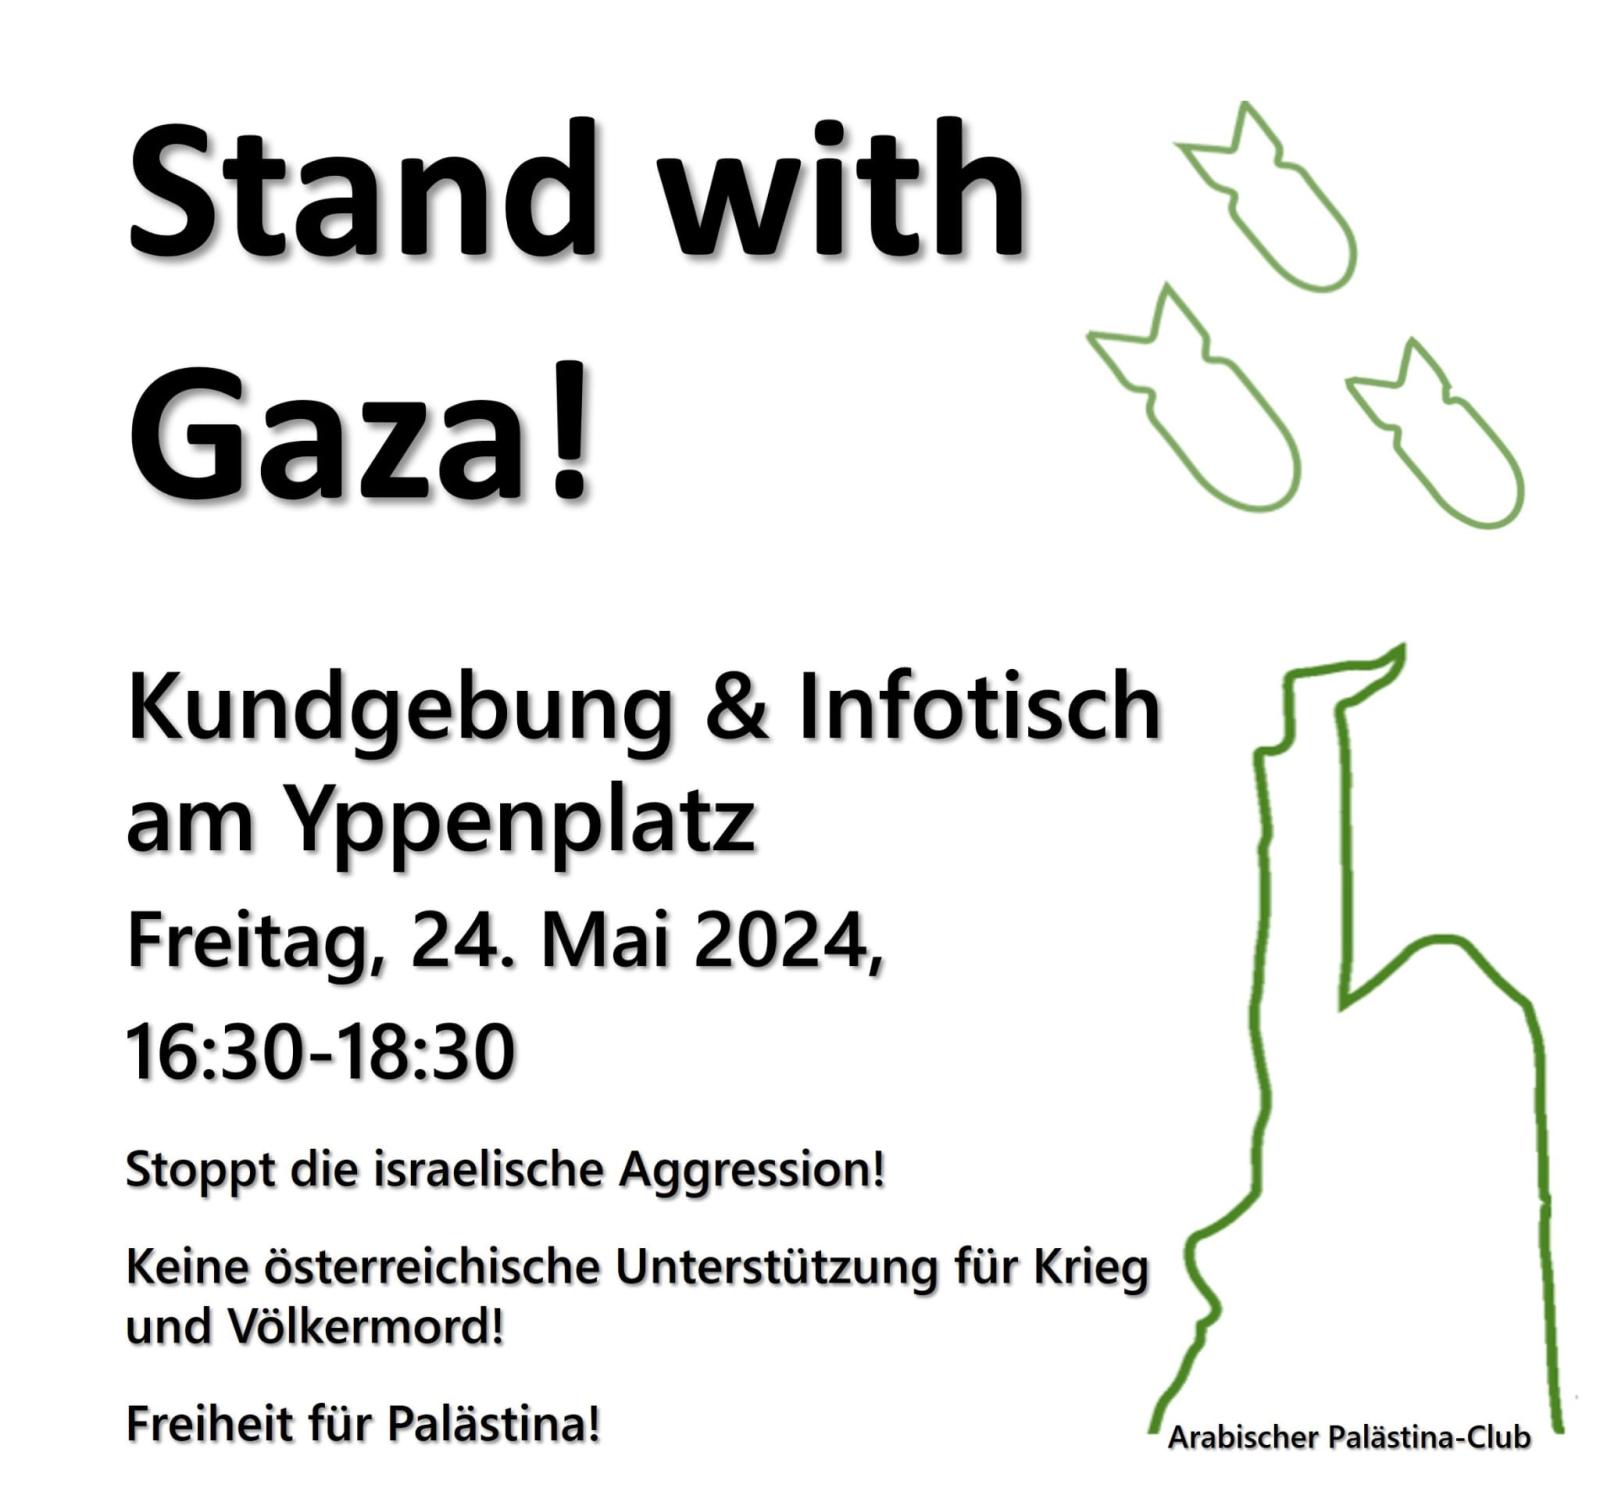 Wien: Stand with Gaza